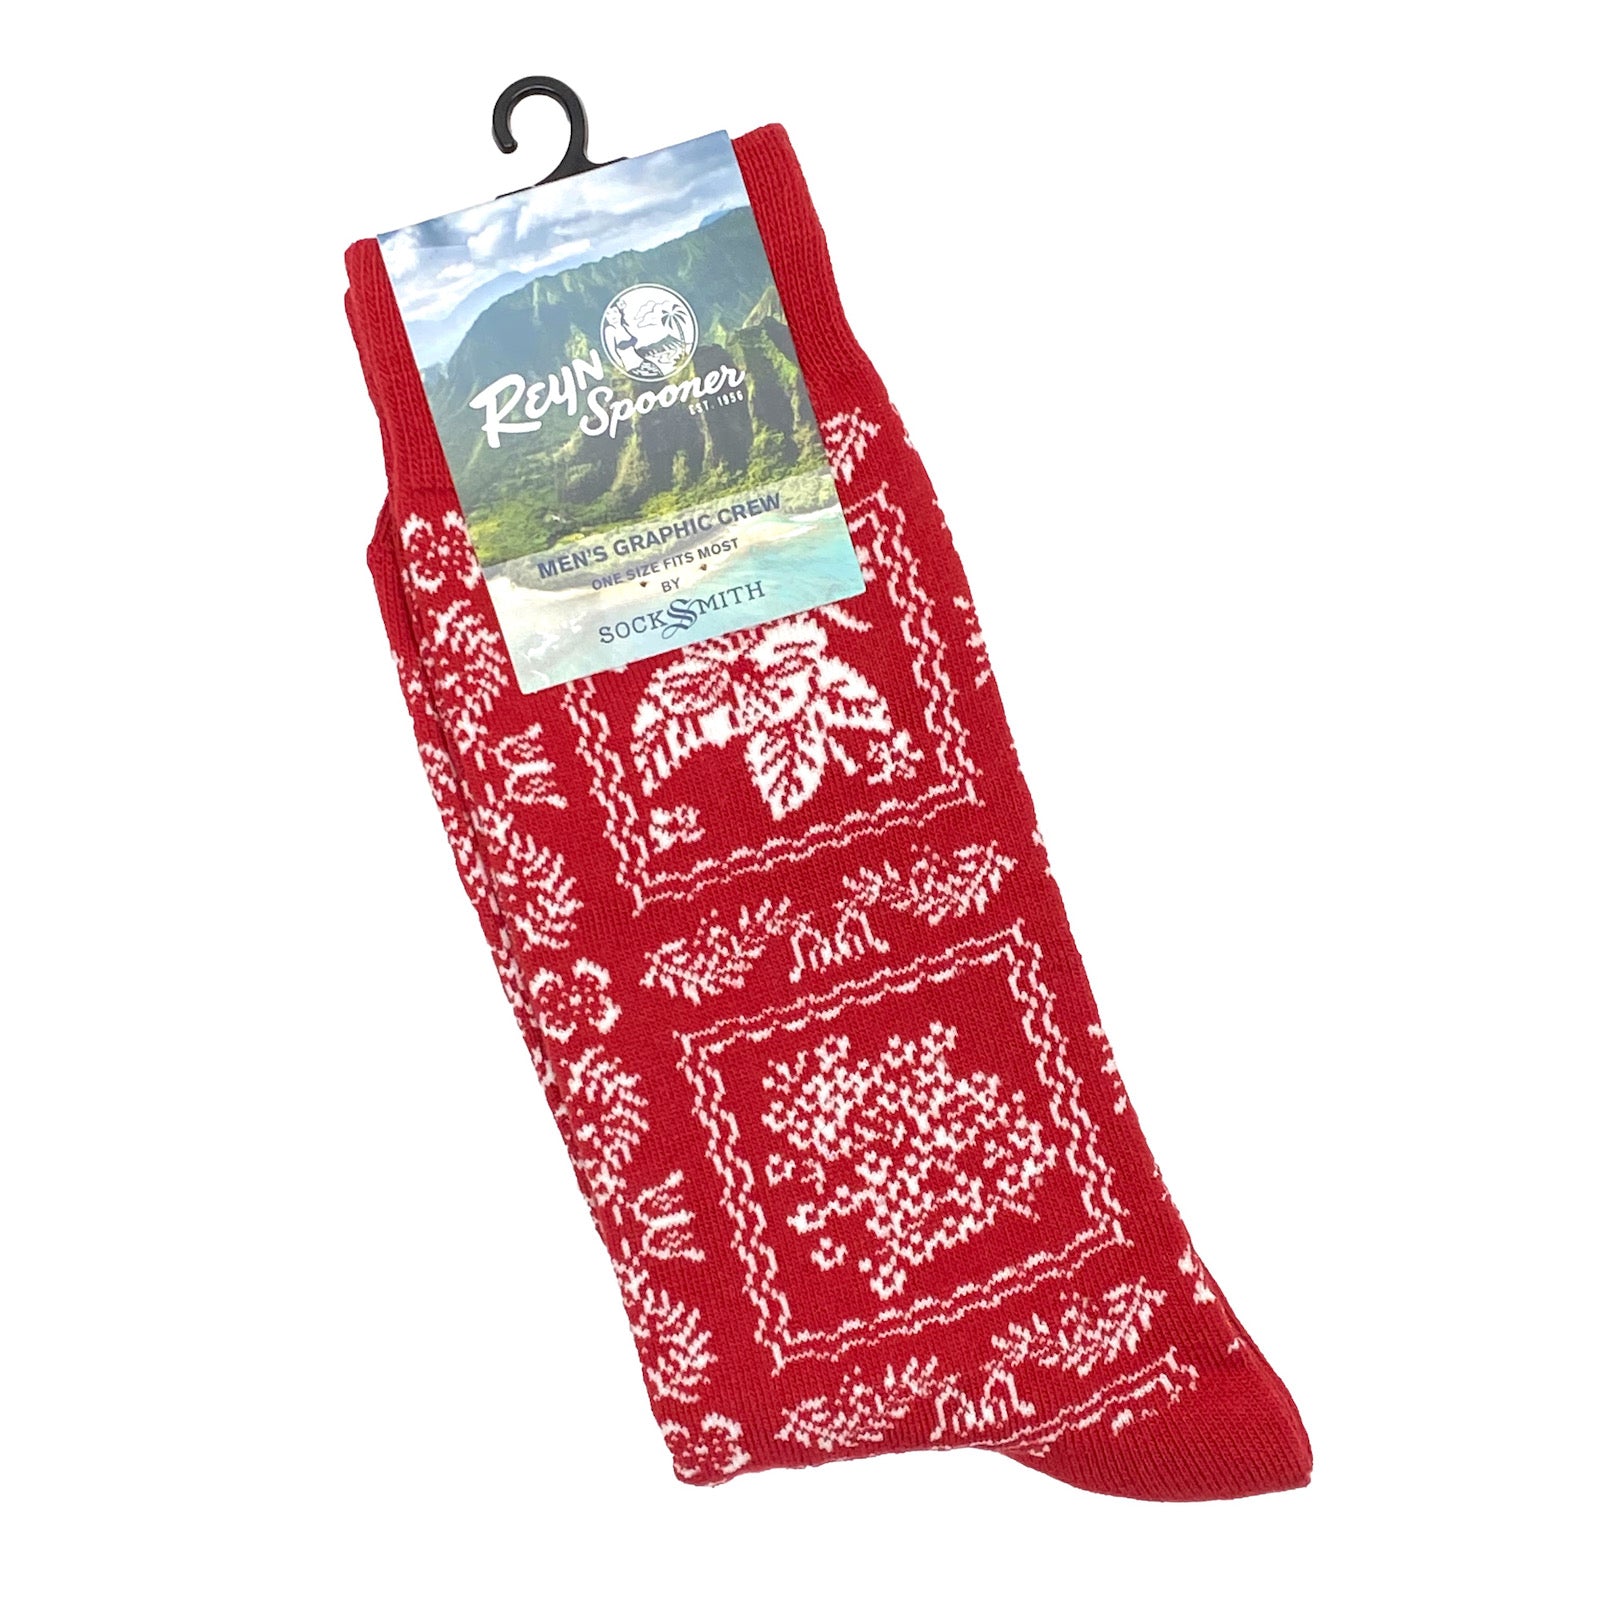 Reyn Spooner Lahaina Sailor Socks Red OS - One Size  805766194839